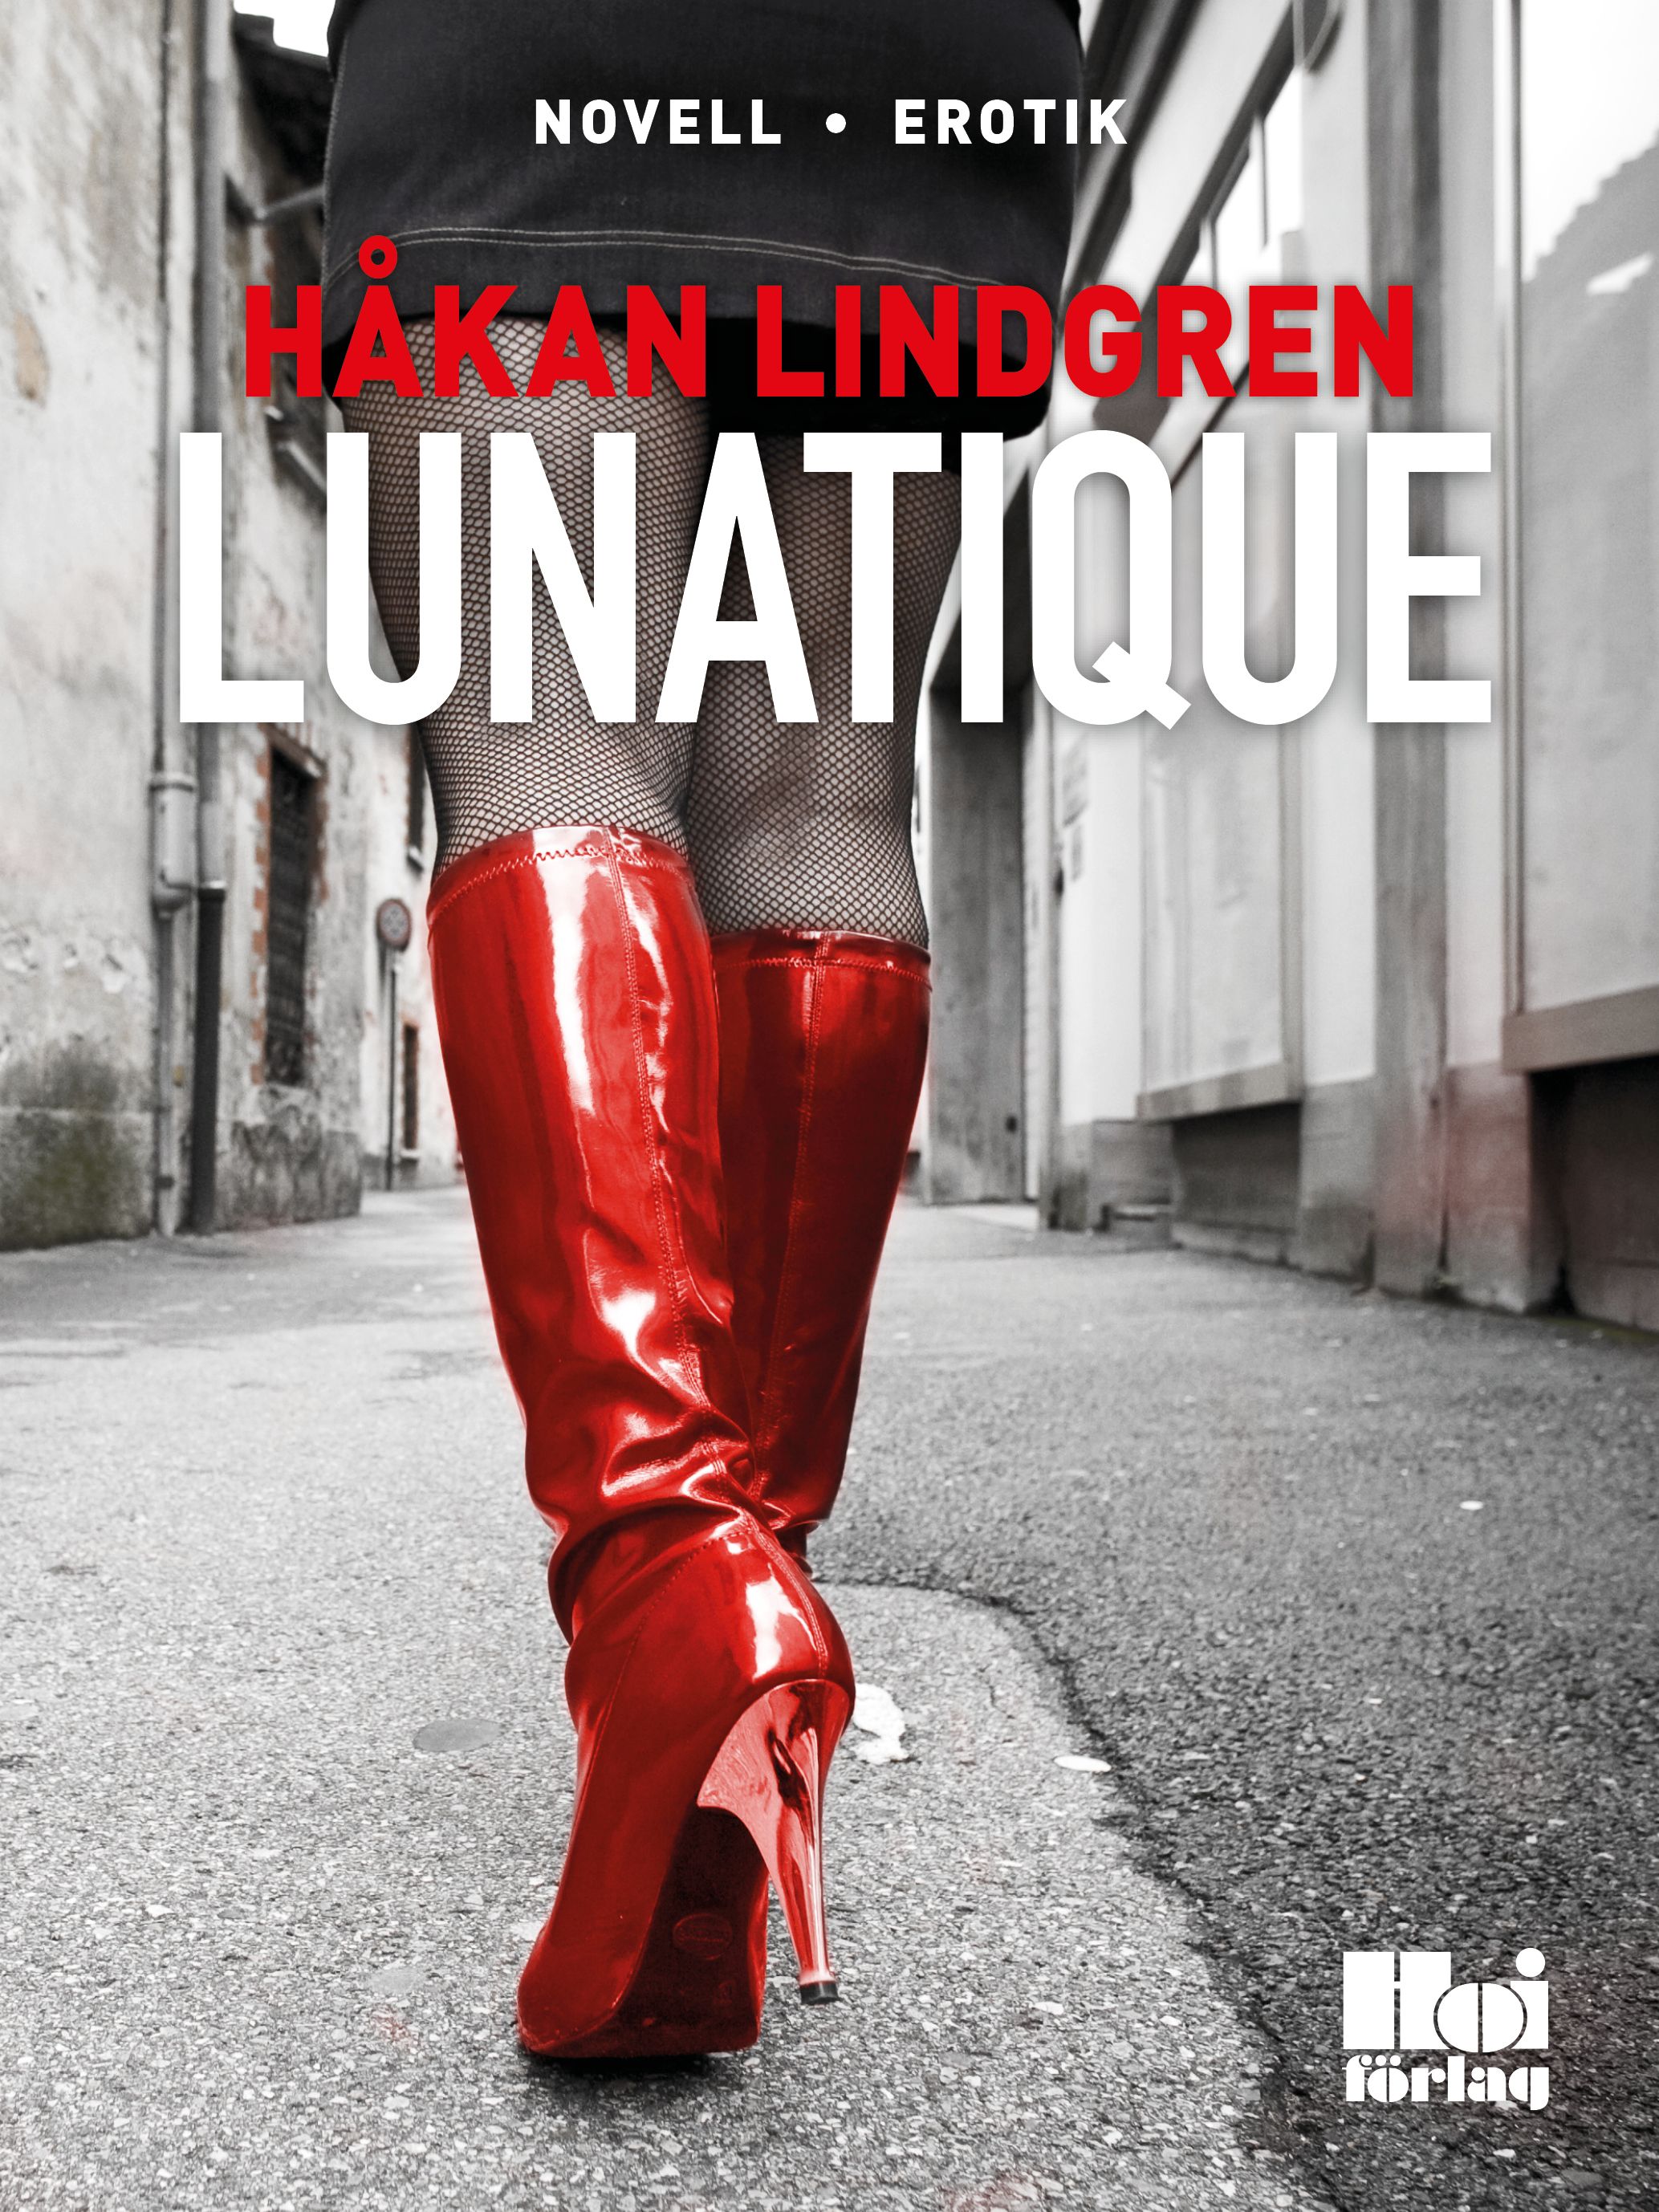 Lunatique, eBook by Håkan Lindgren